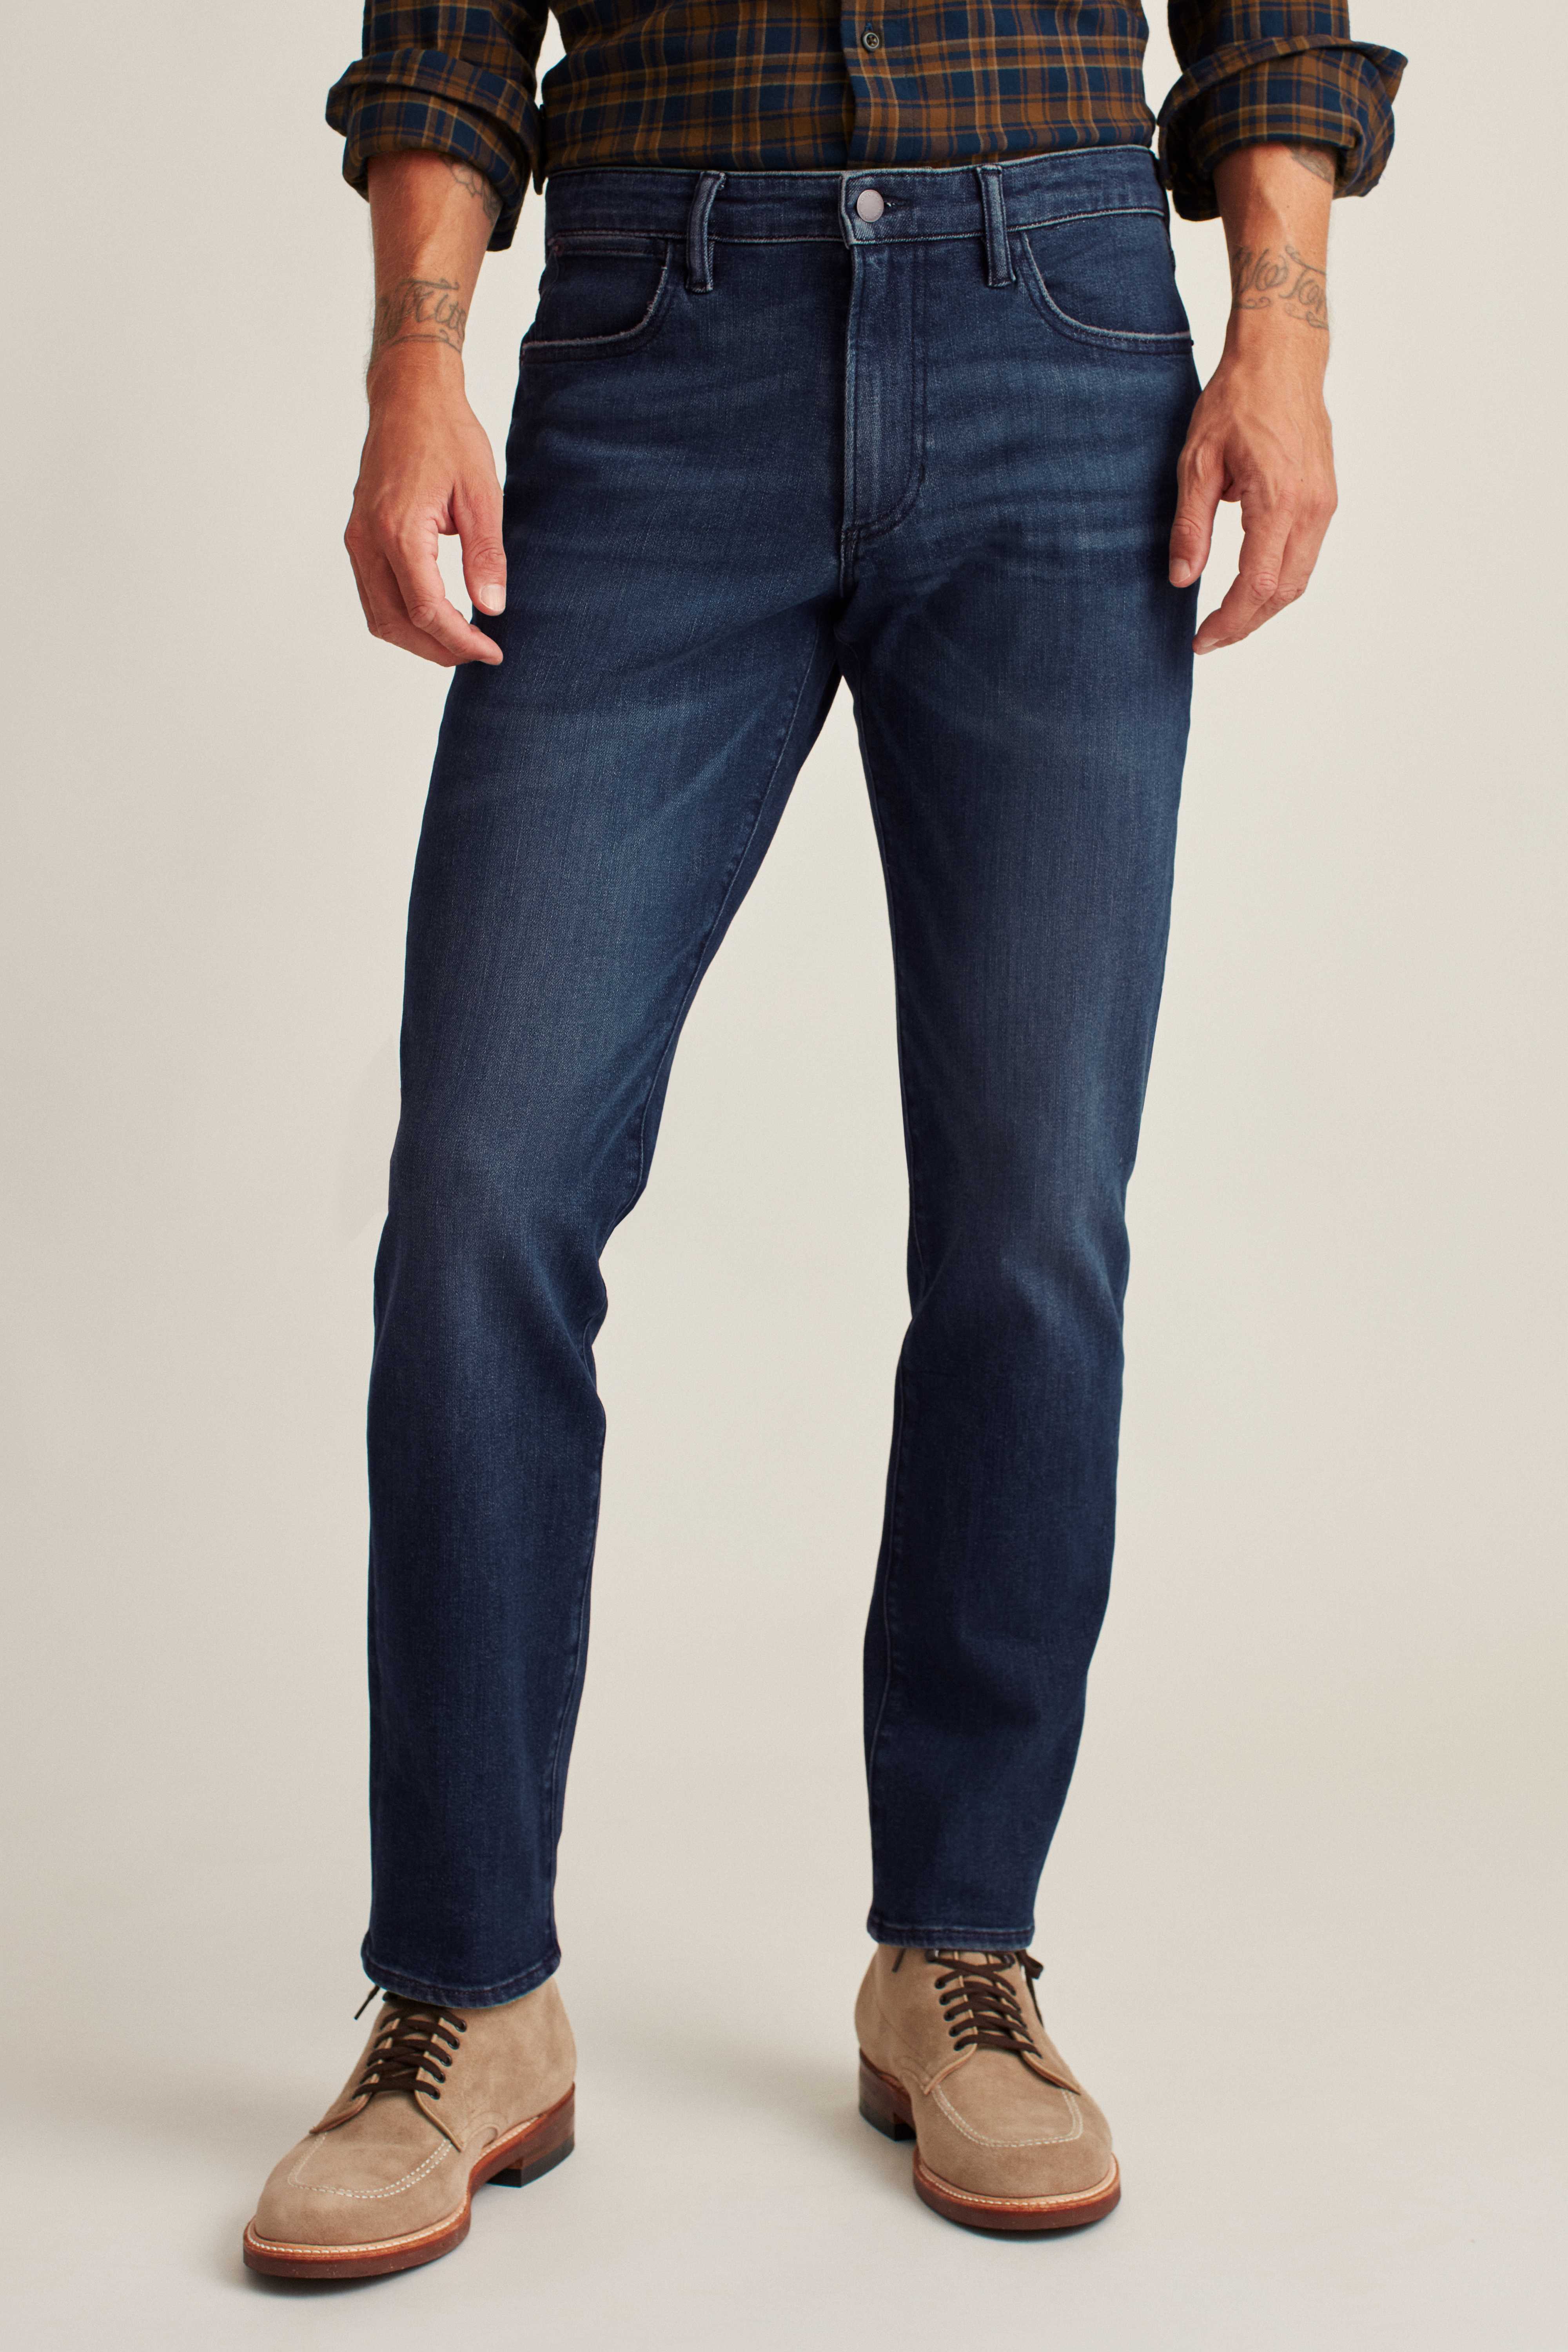 Genuine Leather Dress Belts For Men - Mens Belt For Suits, Jeans, Uniform  With Single Prong Buckle - Designed in the USA - Walmart.com